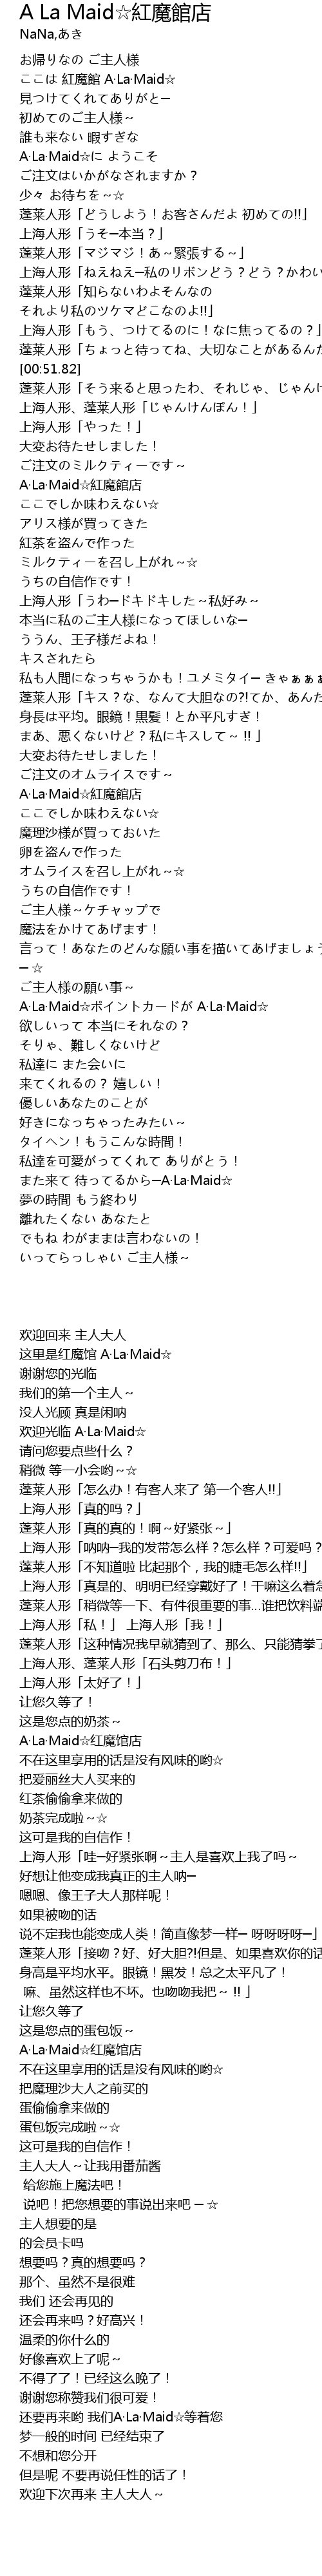 A La Maid 紅魔館店 A La Maid Hong Mo Guan Dian Lyrics Follow Lyrics